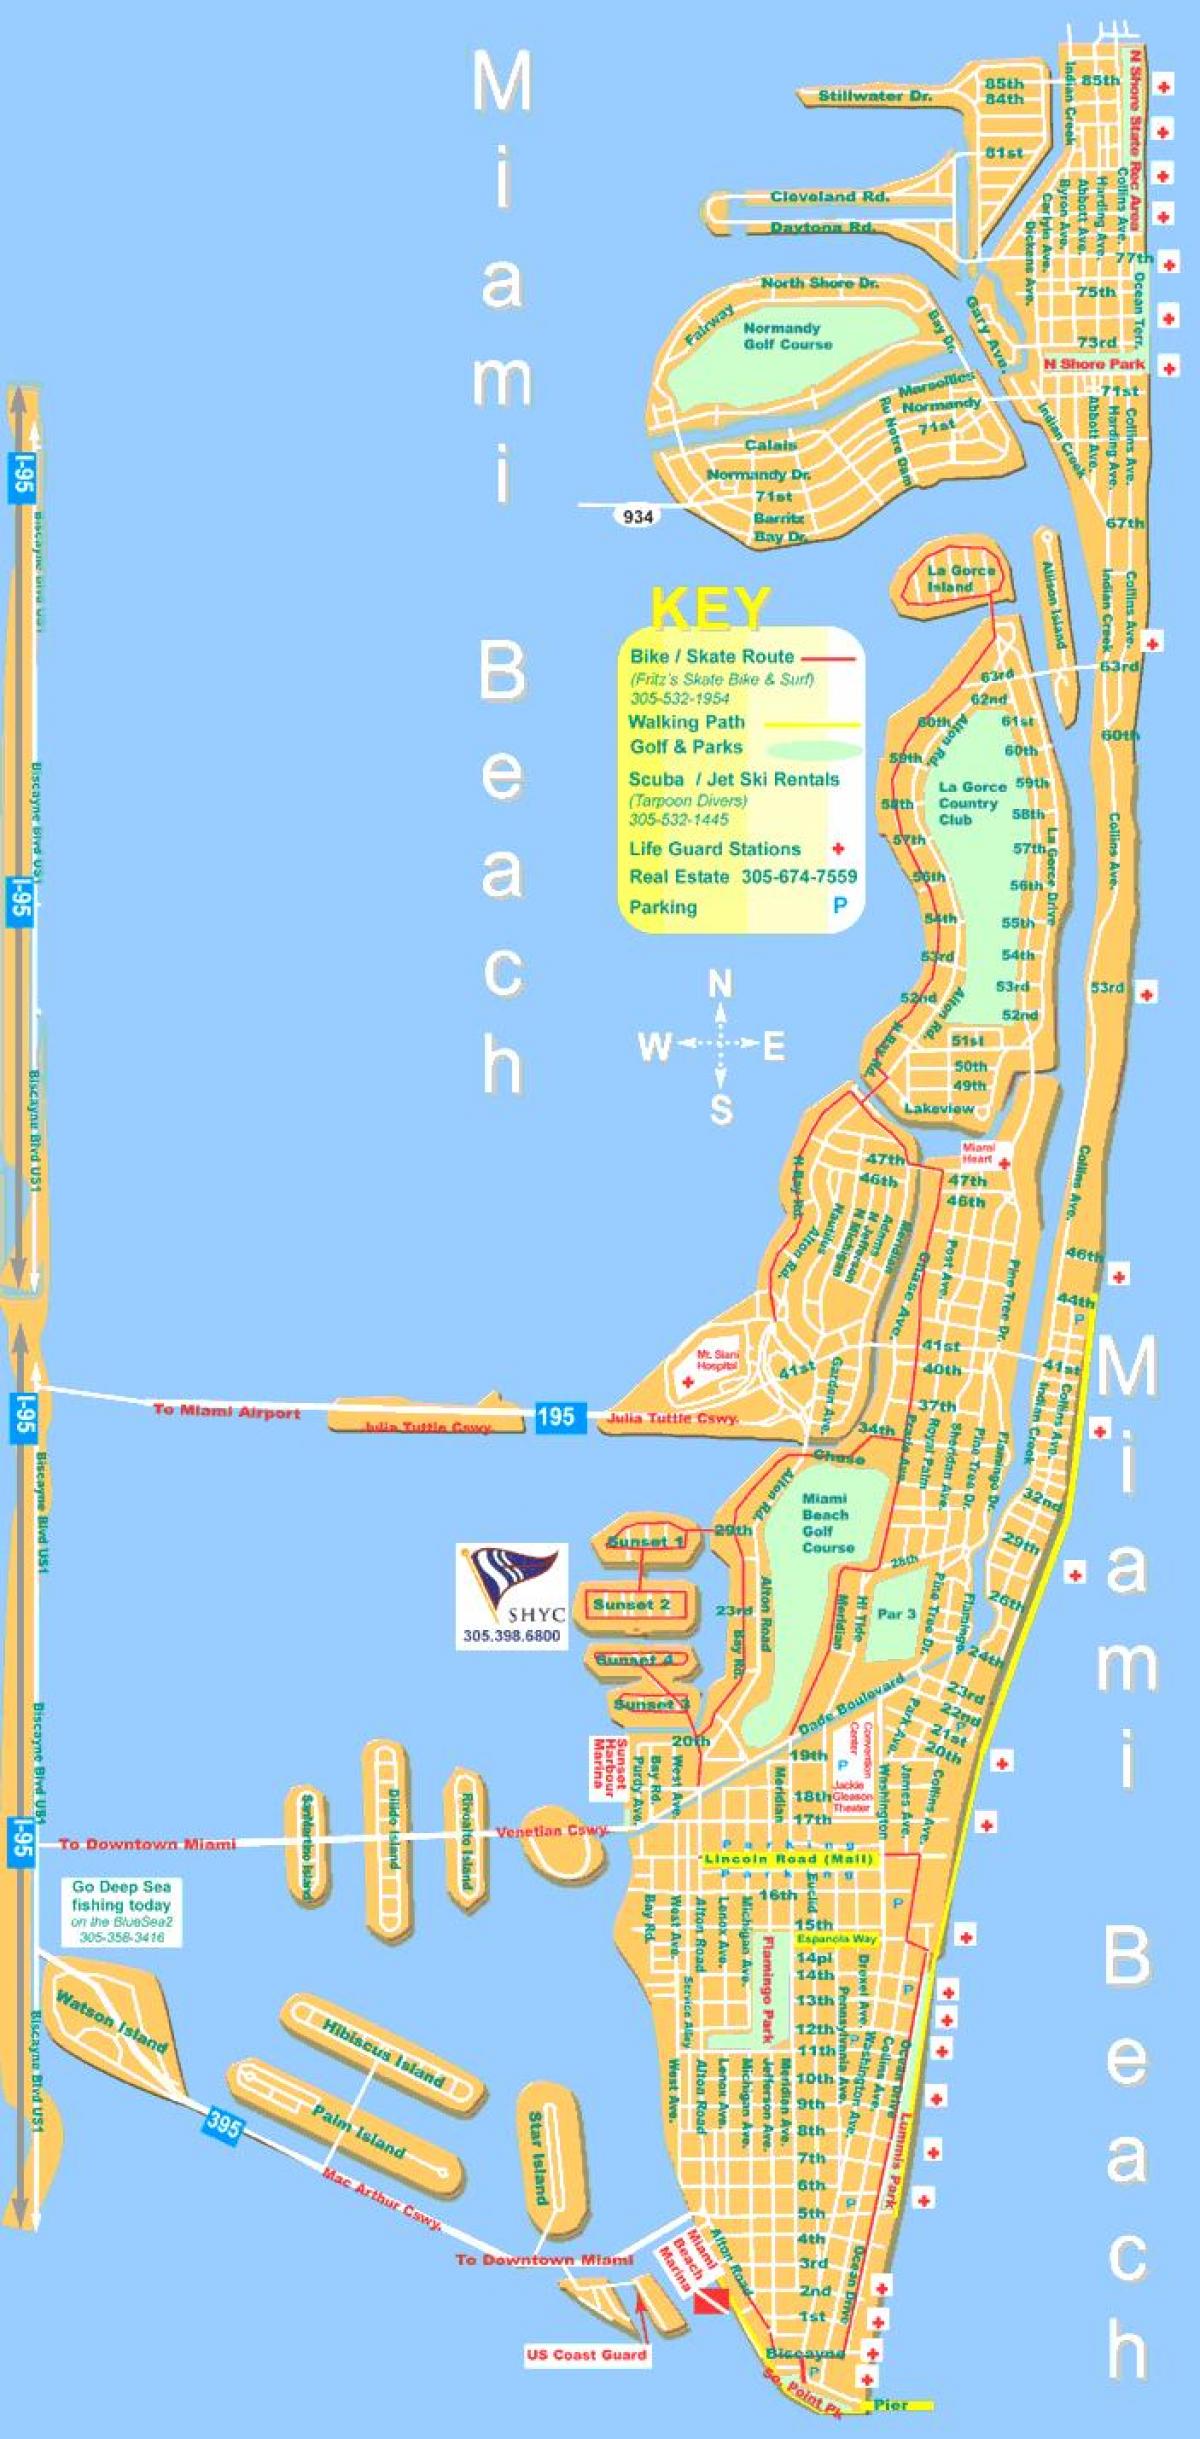 miami beach kort - kort over miami beach (florida - usa)